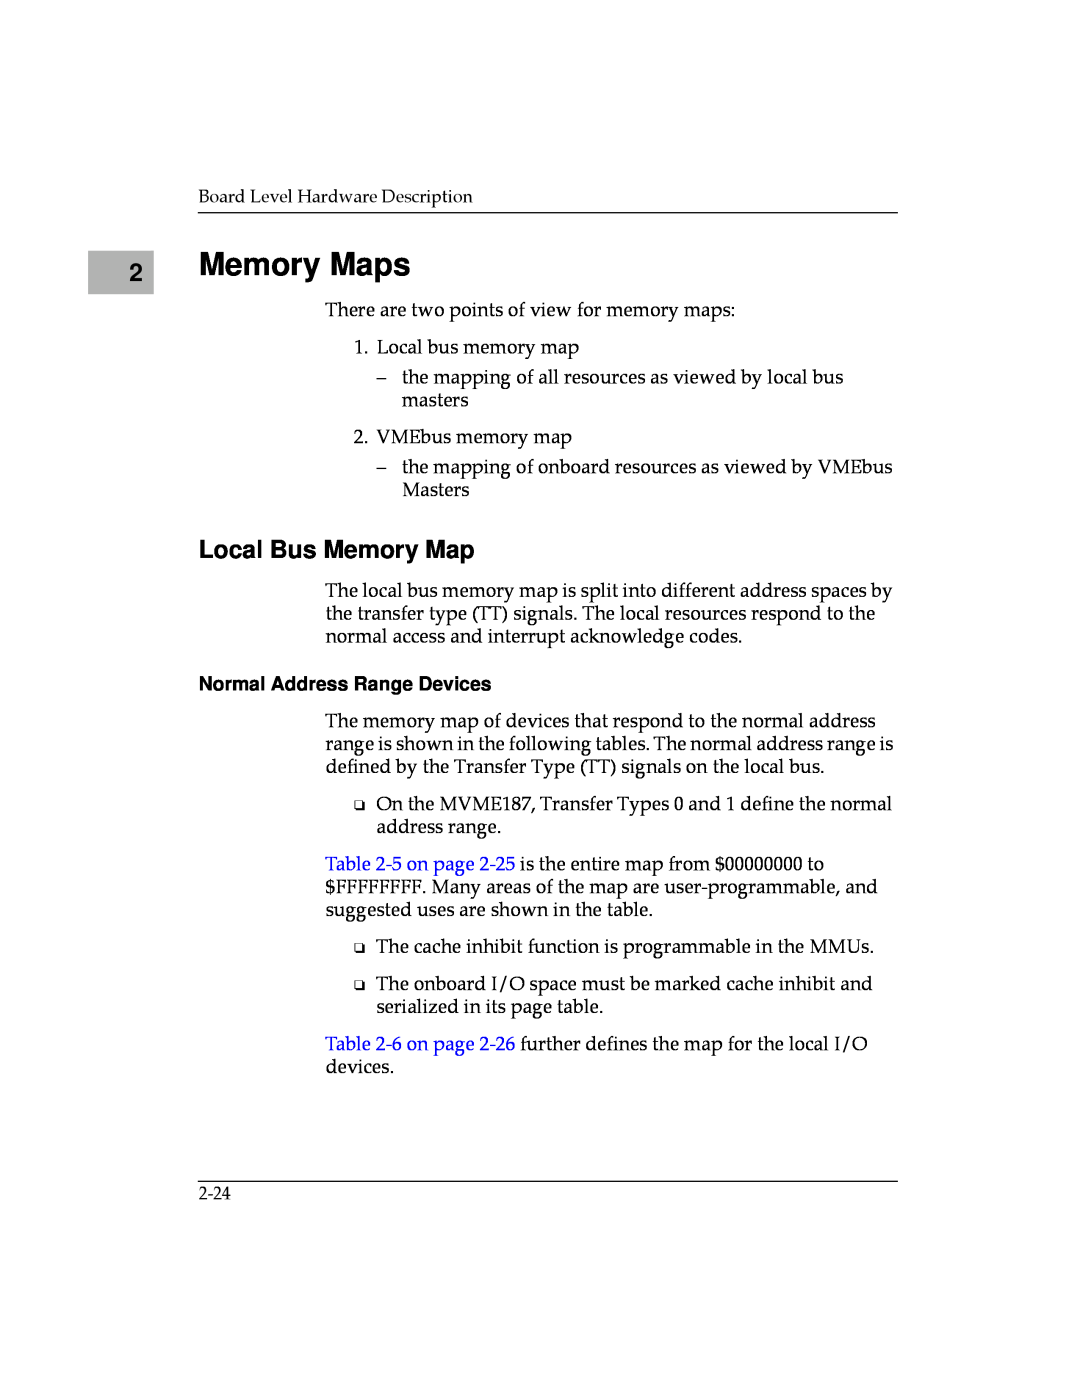 Motorola MVME187 manual Memory Maps, Local Bus Memory Map, Normal Address Range Devices 